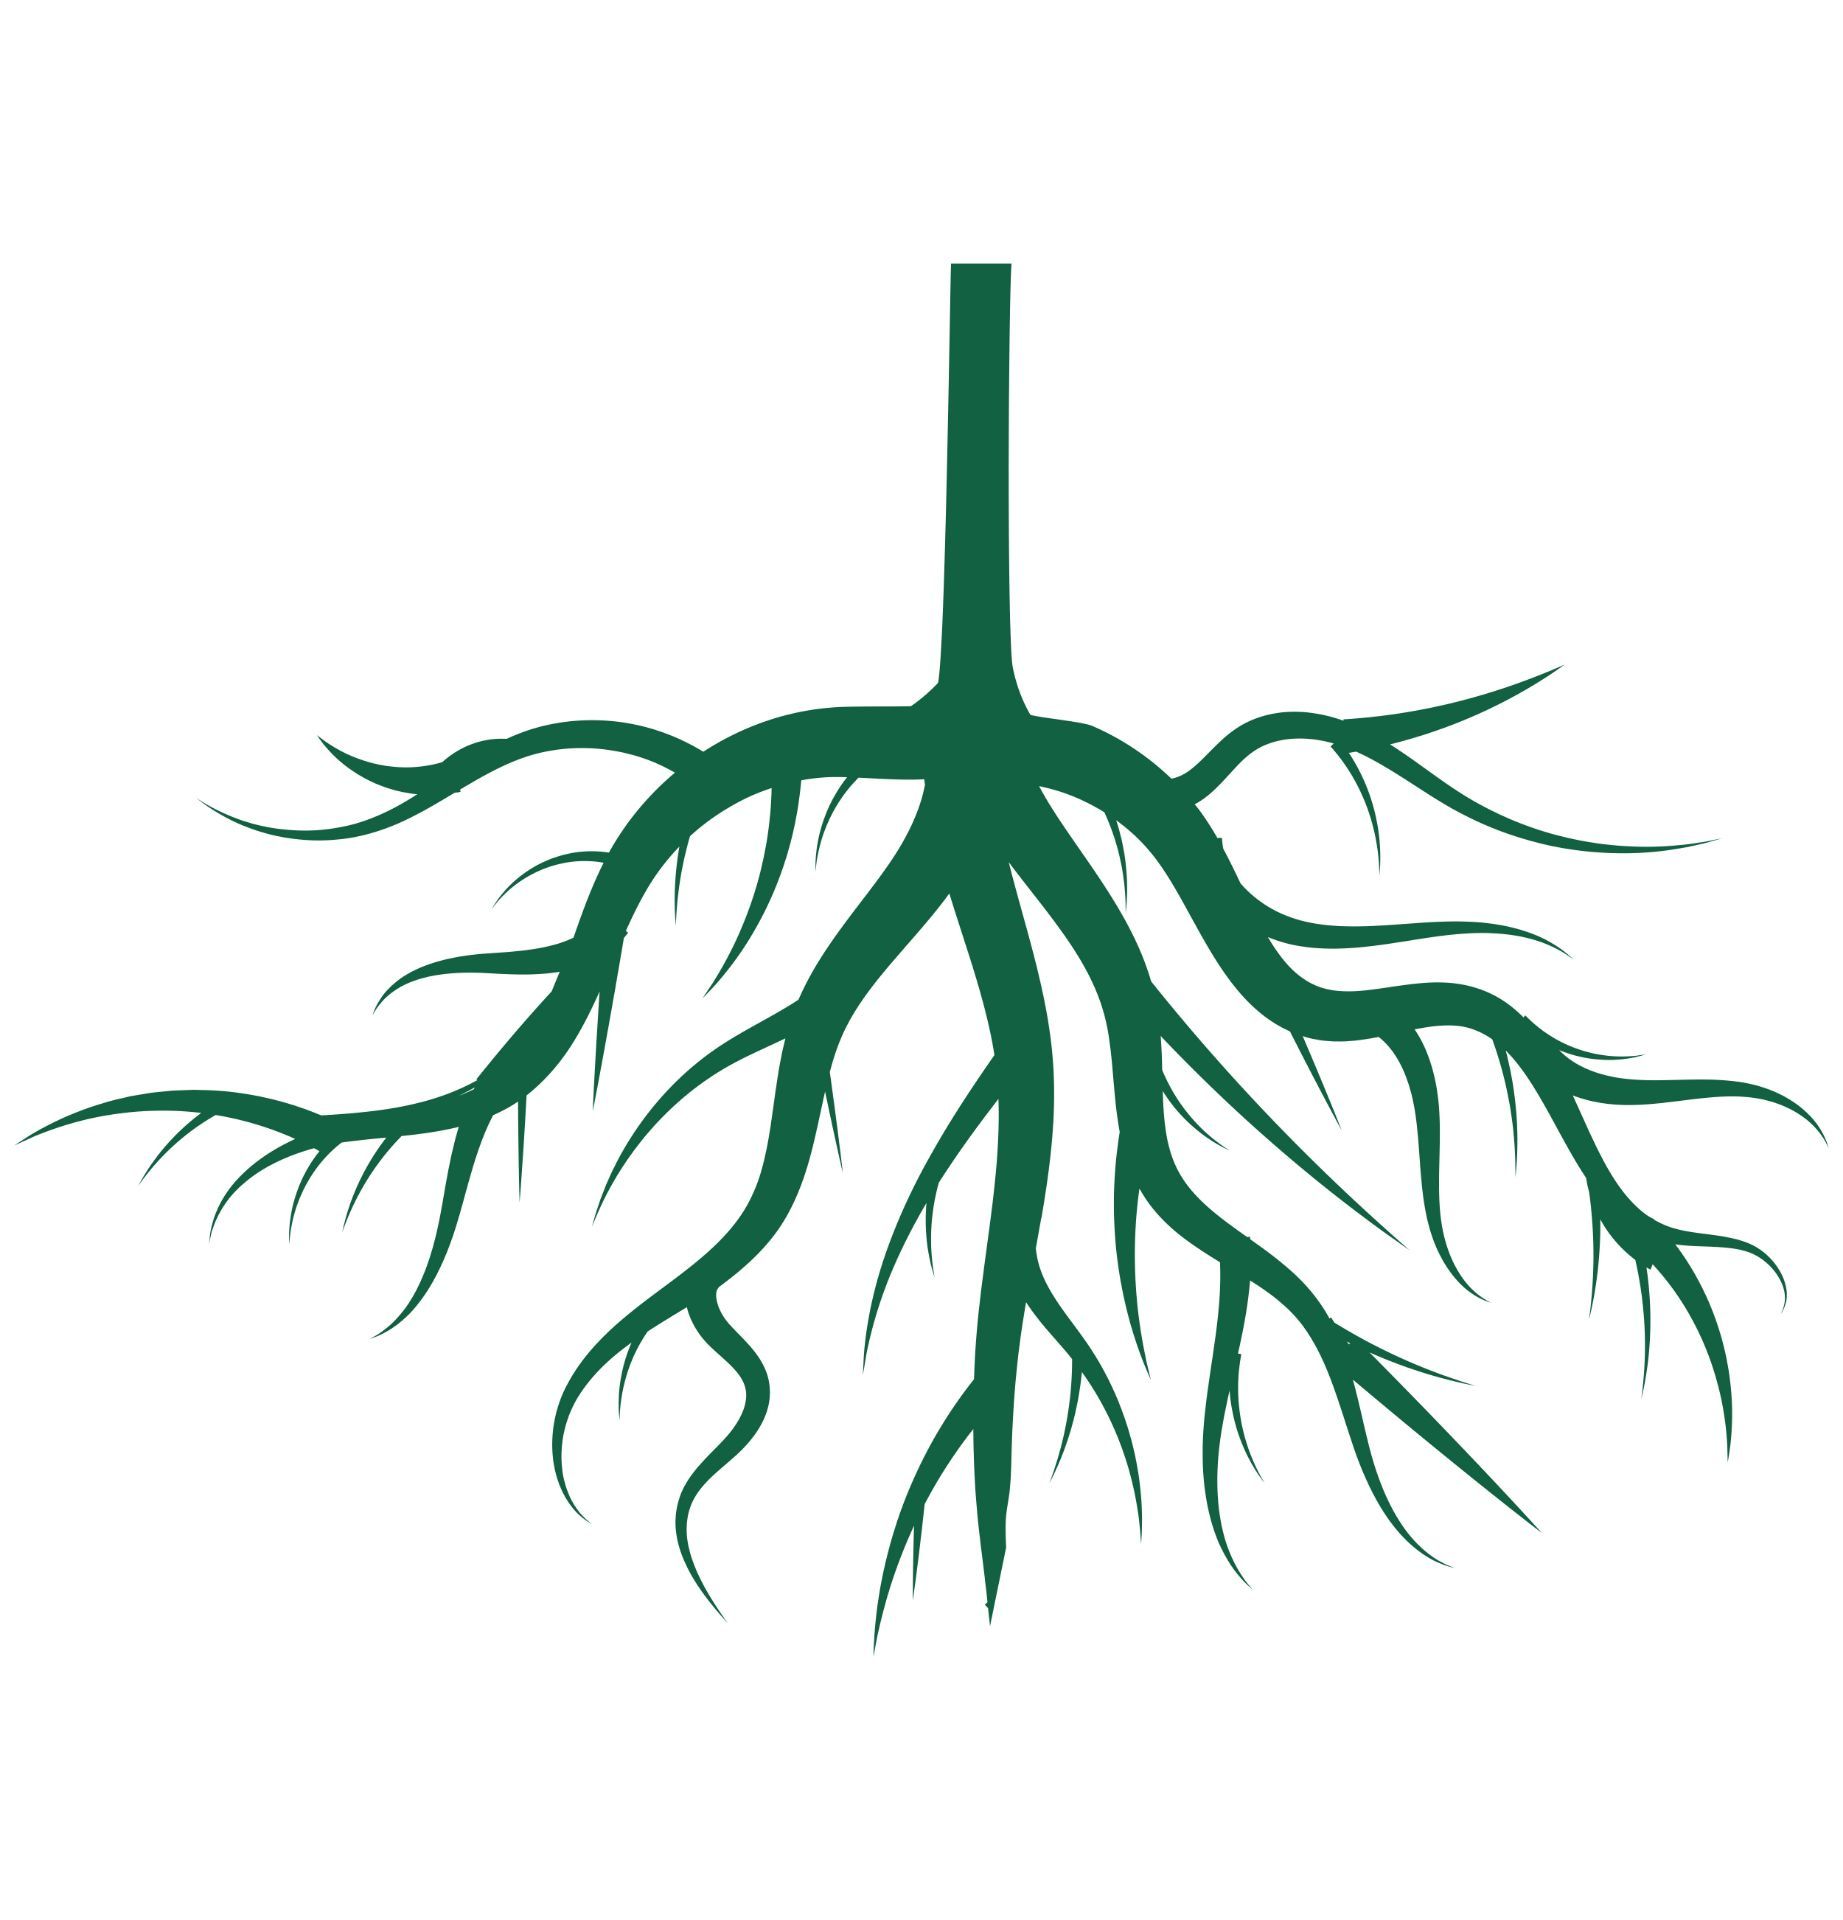 Bare root · Gola korenina · Nackte Wurzel · Goli korijen